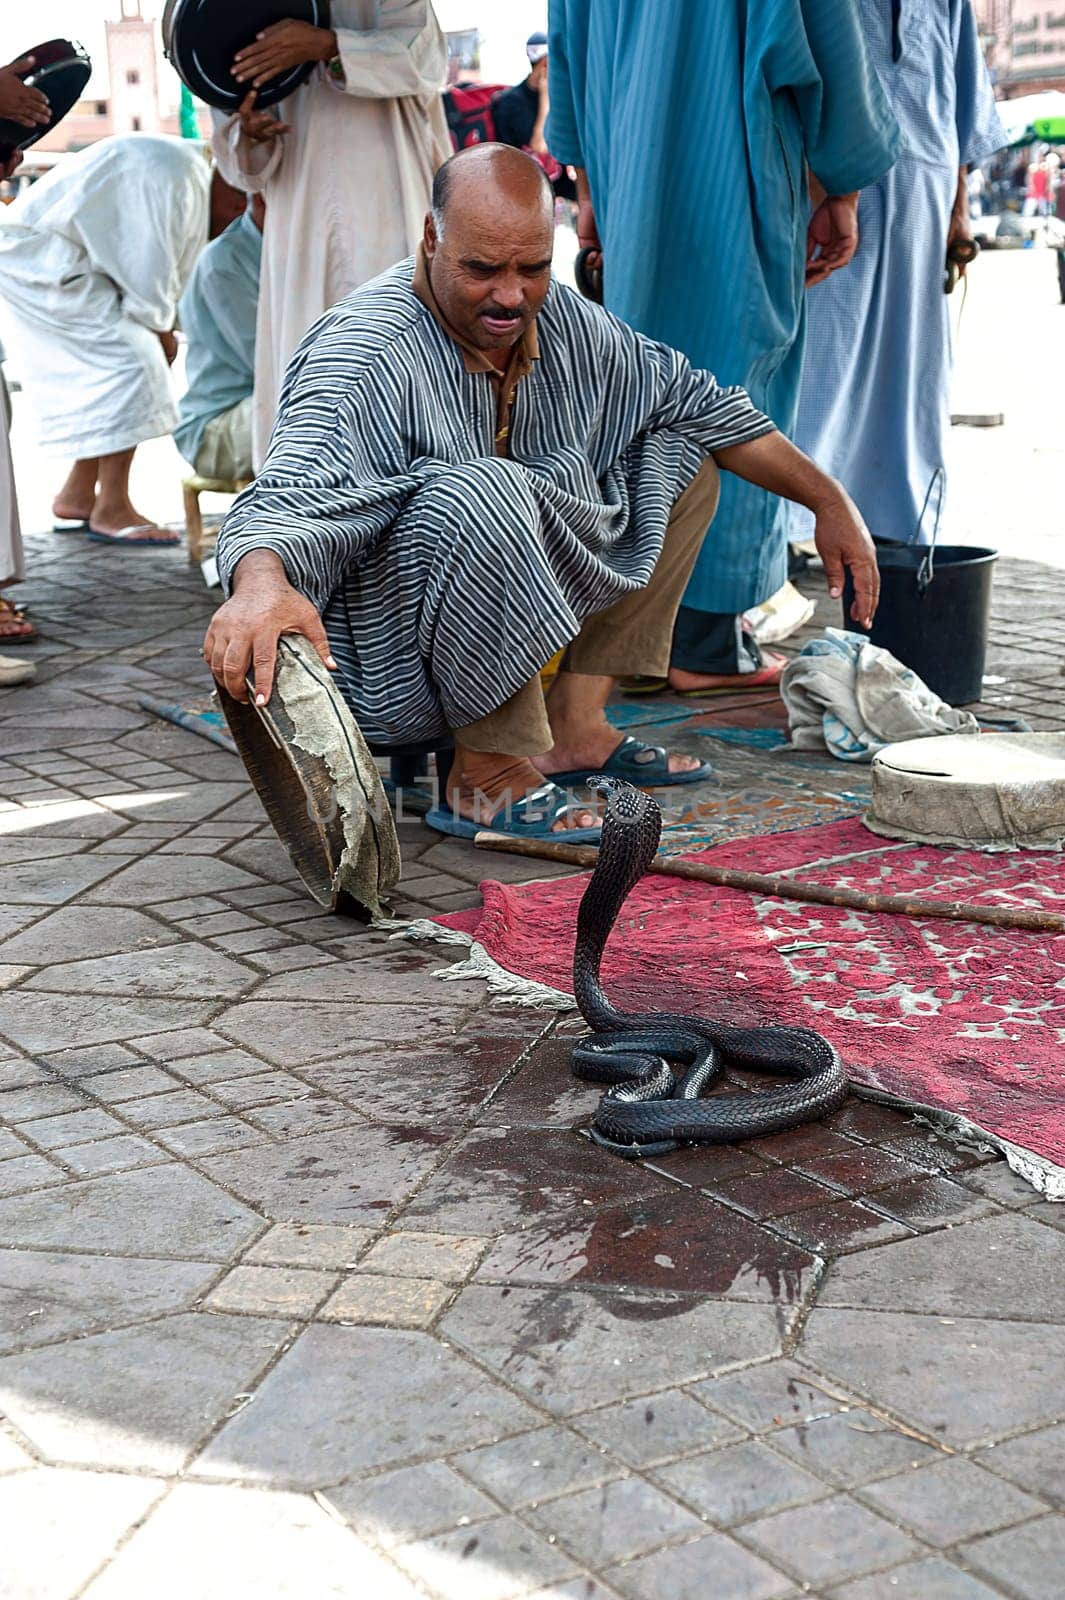 Snake charmer in Marrakesh, Morocco by Giamplume